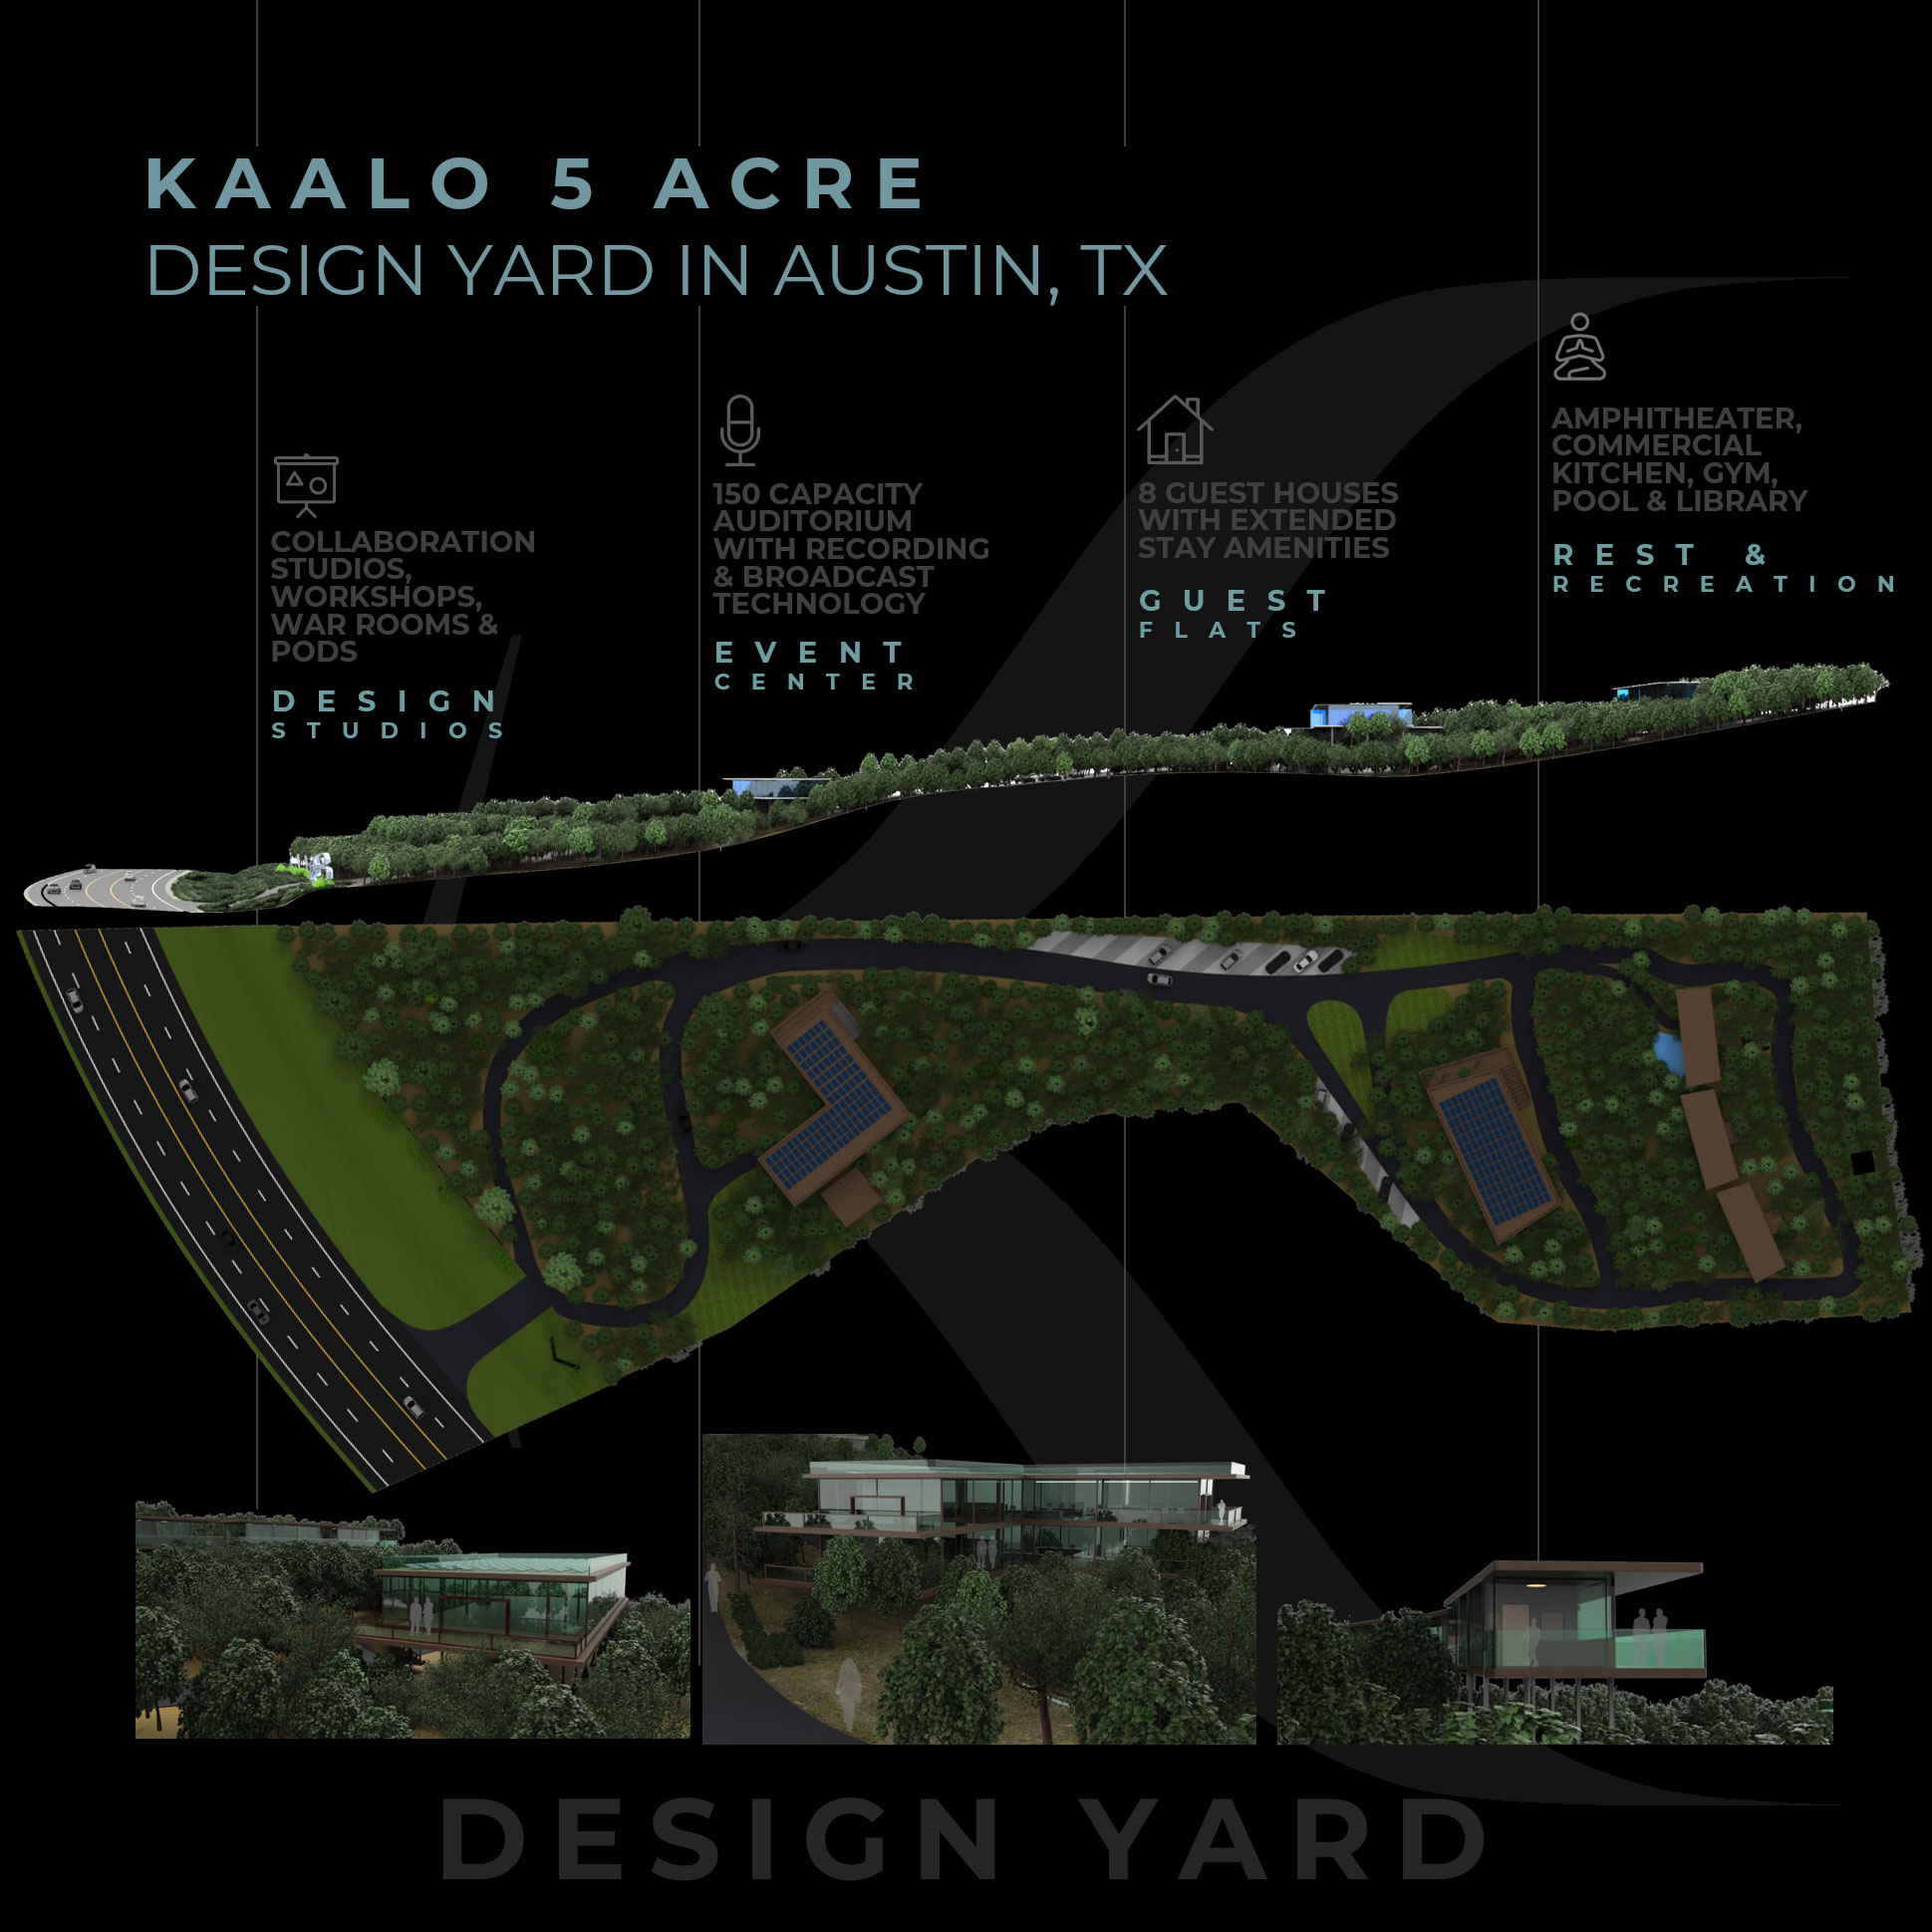 Kaalo 5 Acre Design Yard in Austin